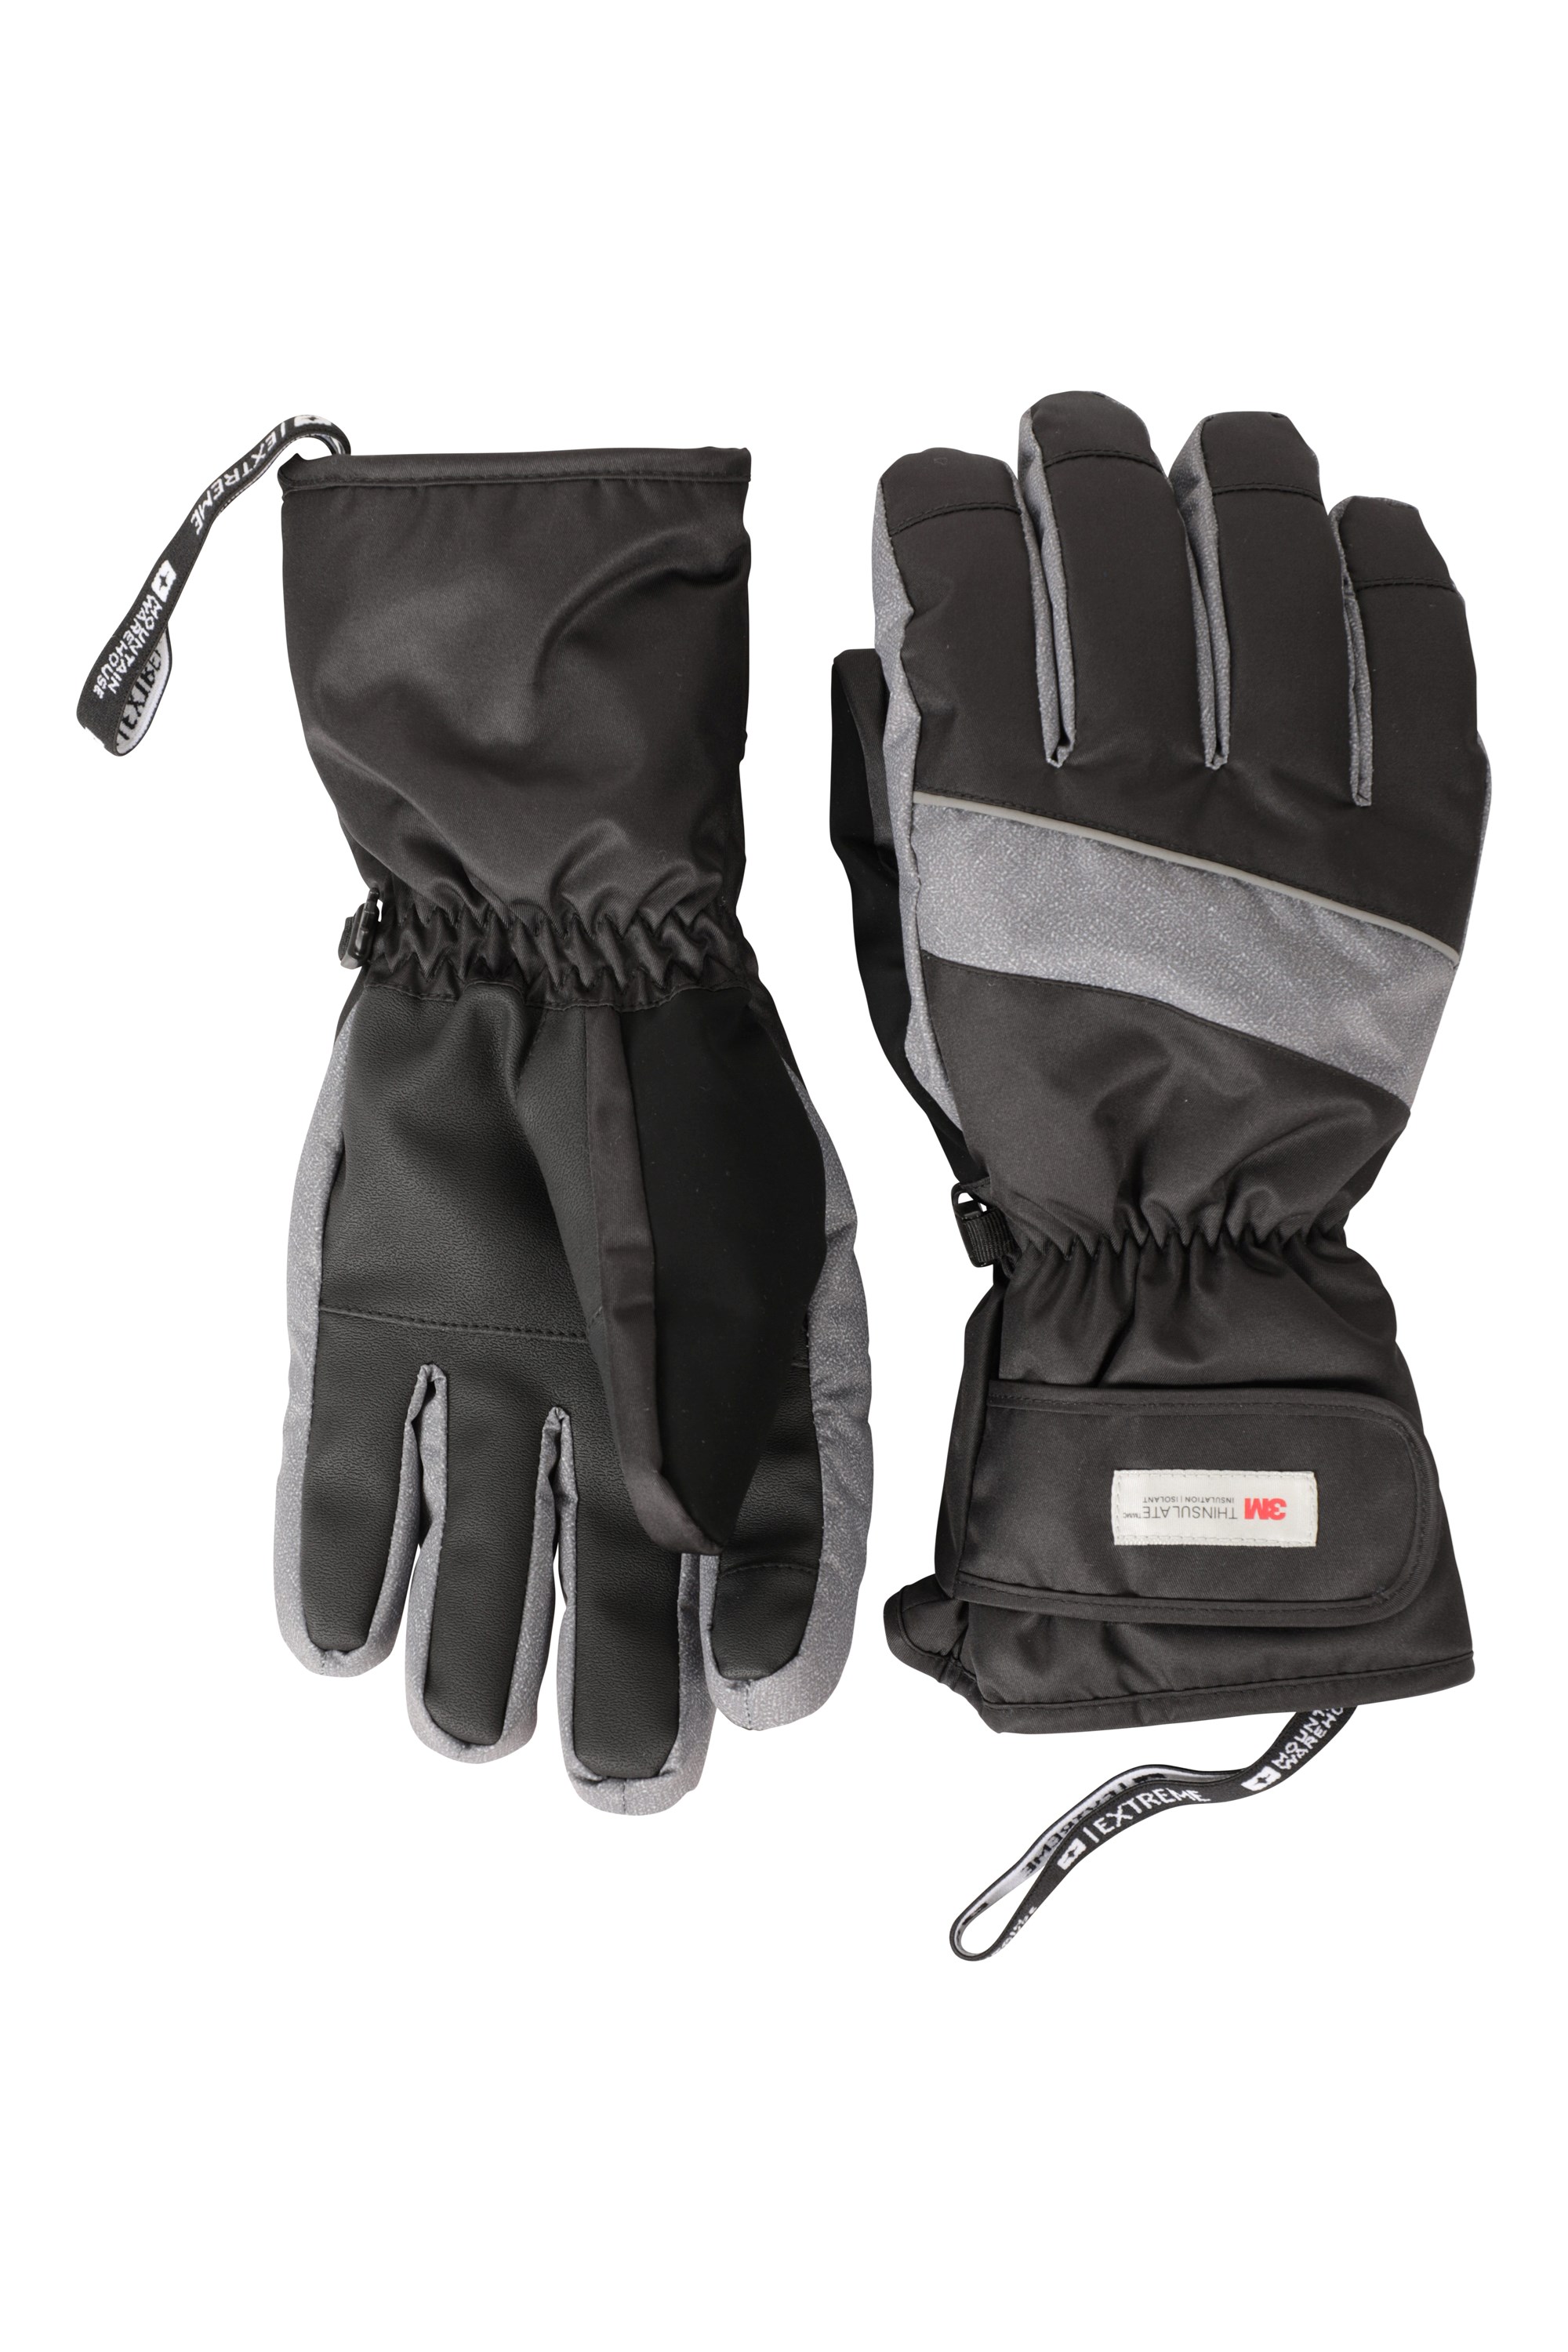 Thinsulate Mens Waterproof Ski Gloves - Grey